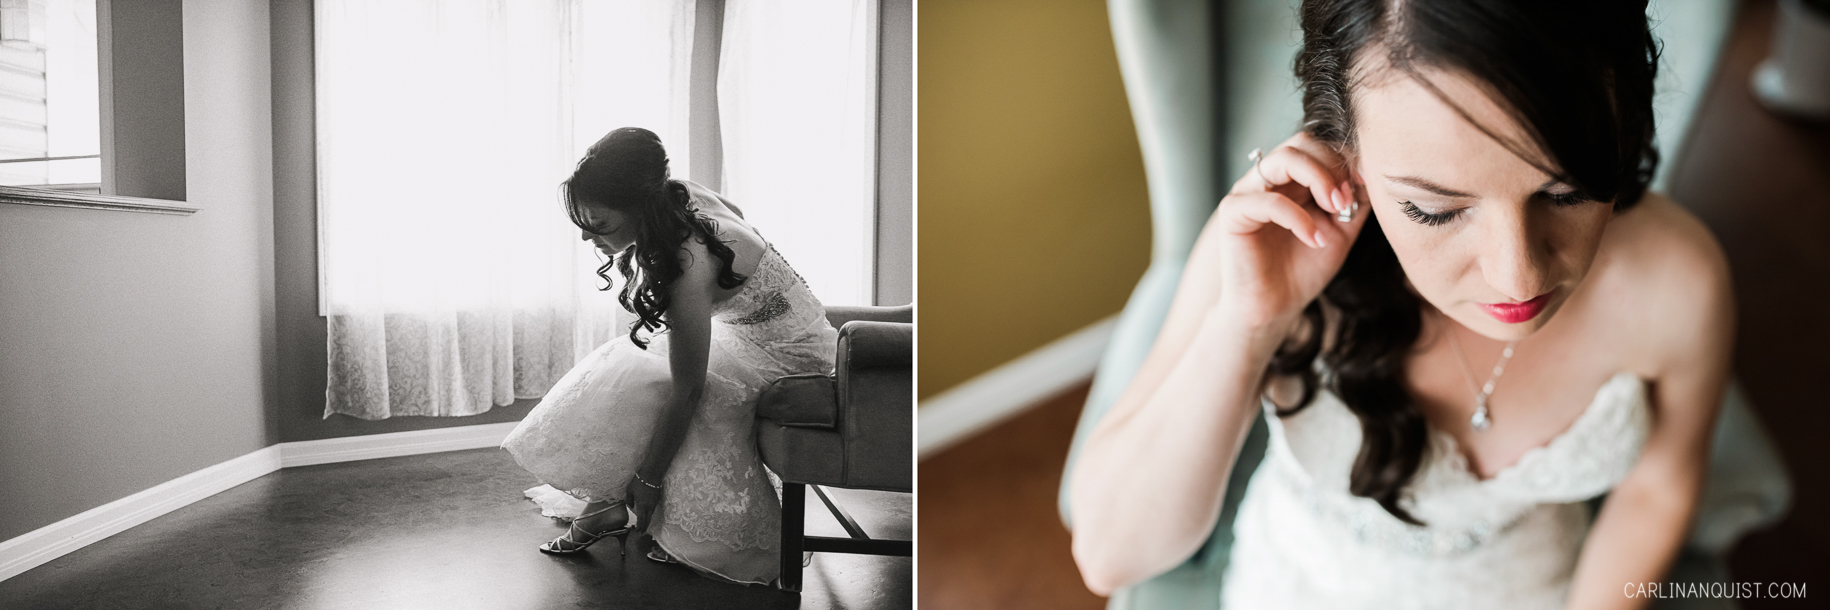 Bride Getting Dressed | Hamptons Golf Club Wedding Photographer